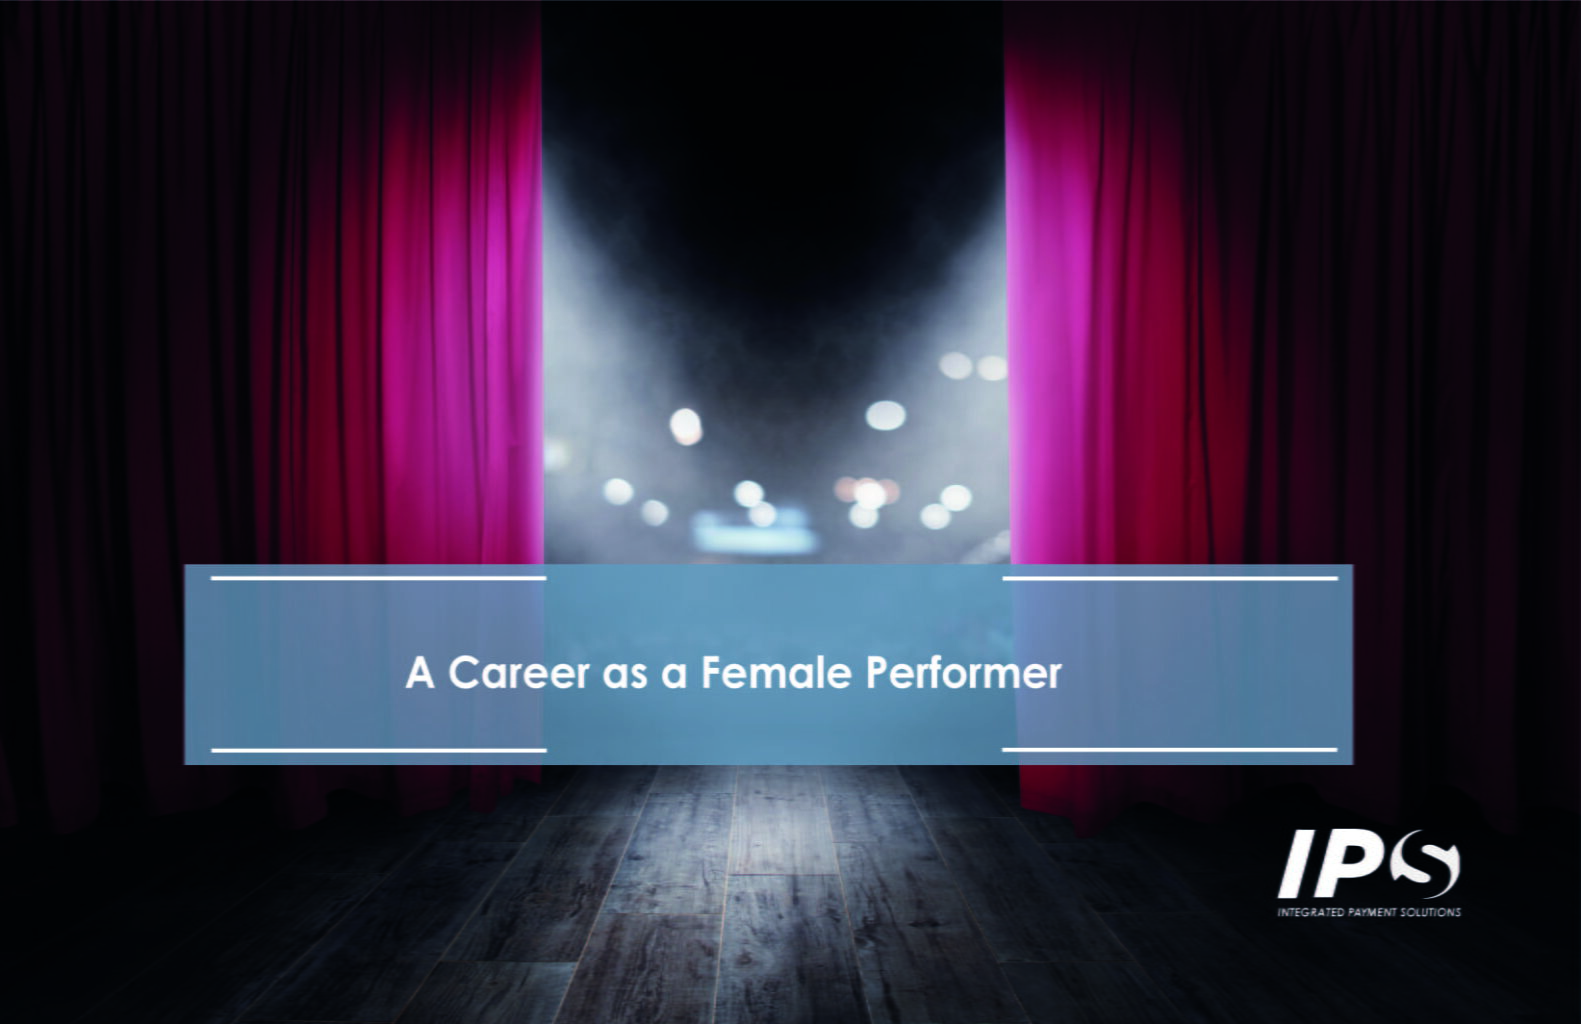 A career as a female performer